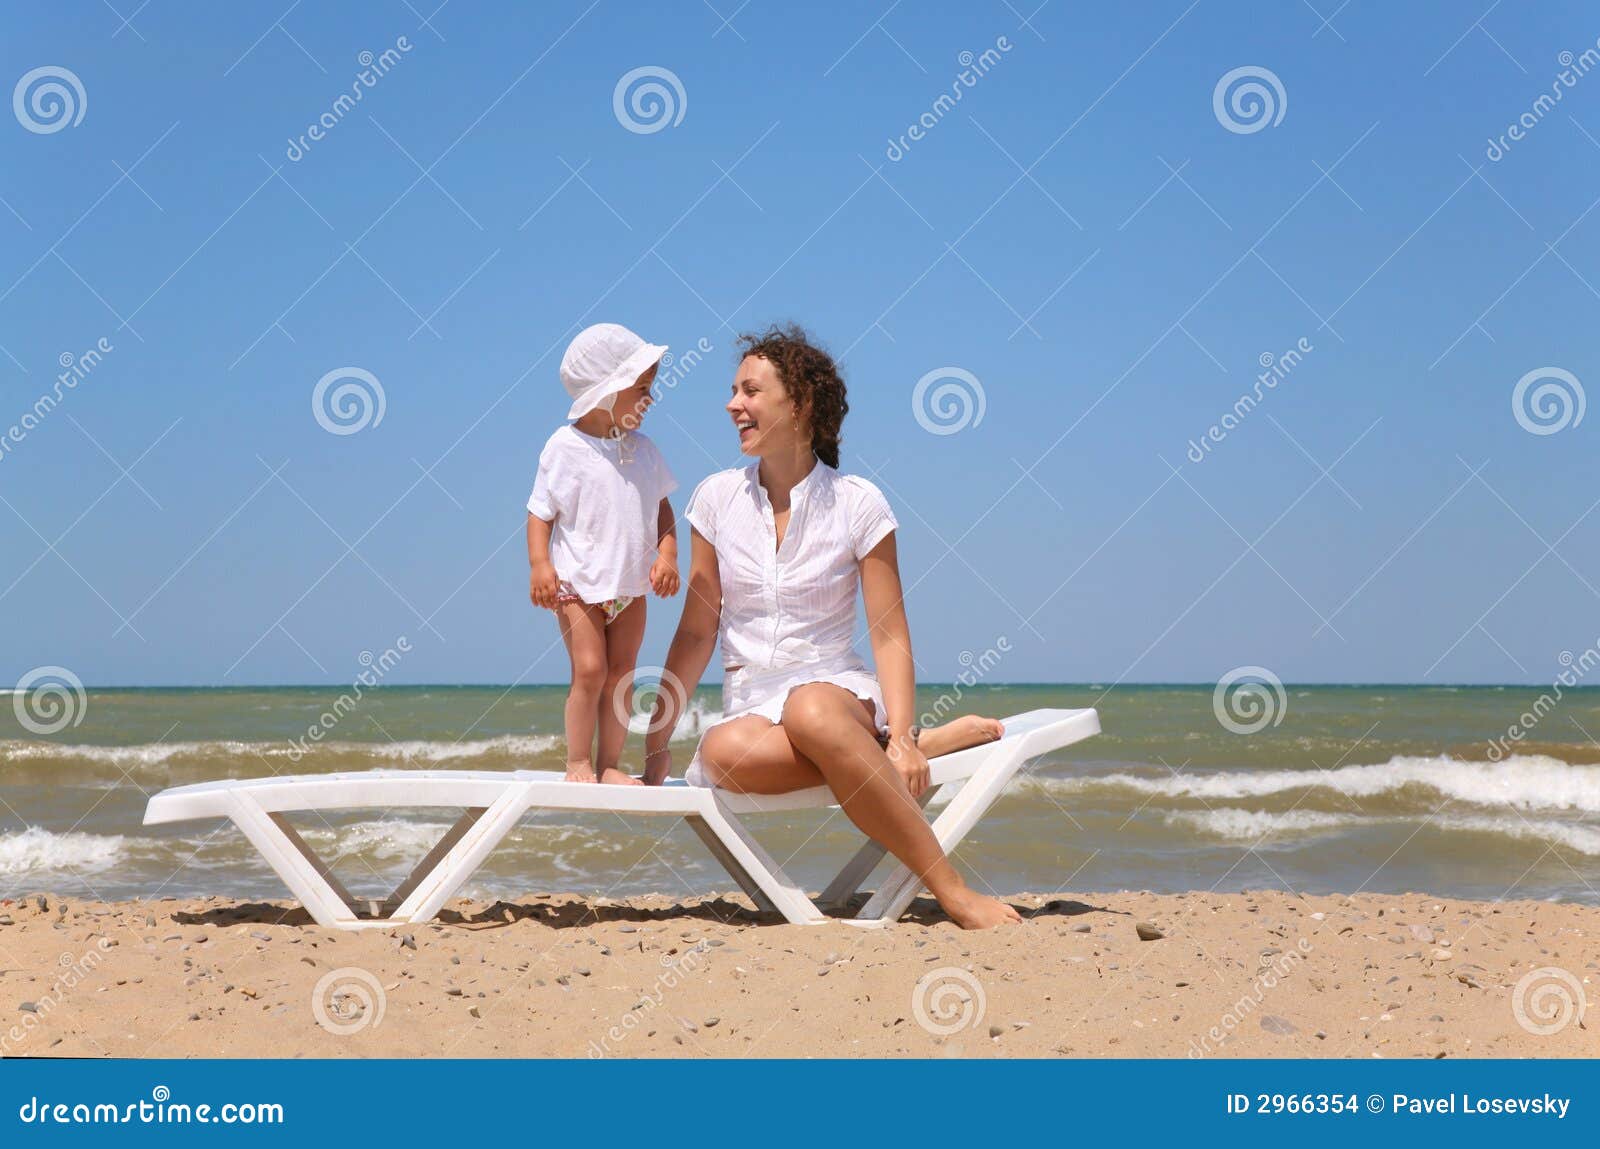 Мама после пляжа. Фото мамы с ребёнком на пляже фигура. Мама с младенцем на пляже после родов.